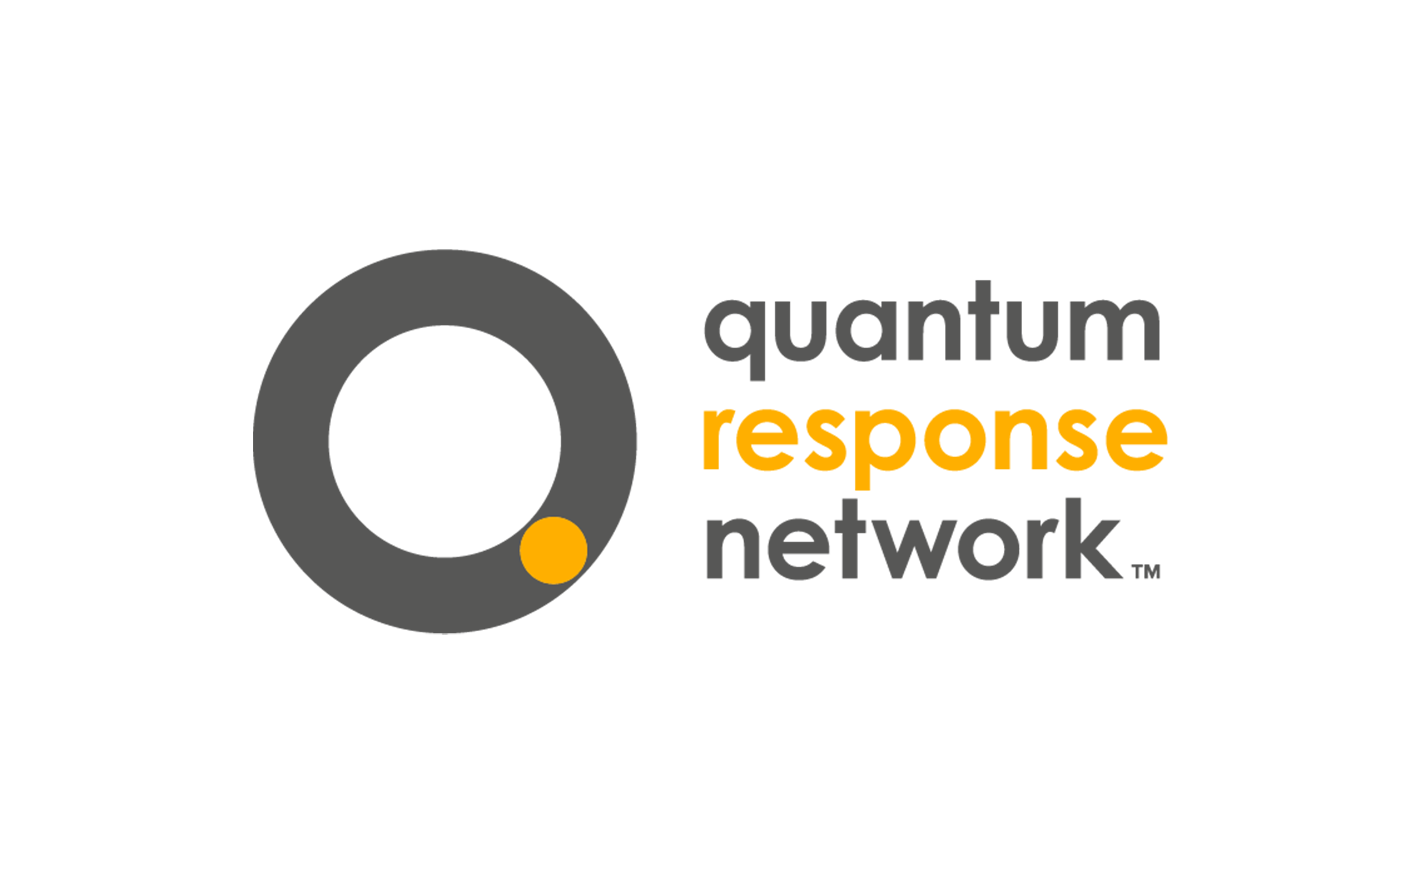 The logo for Quantum Response Network.